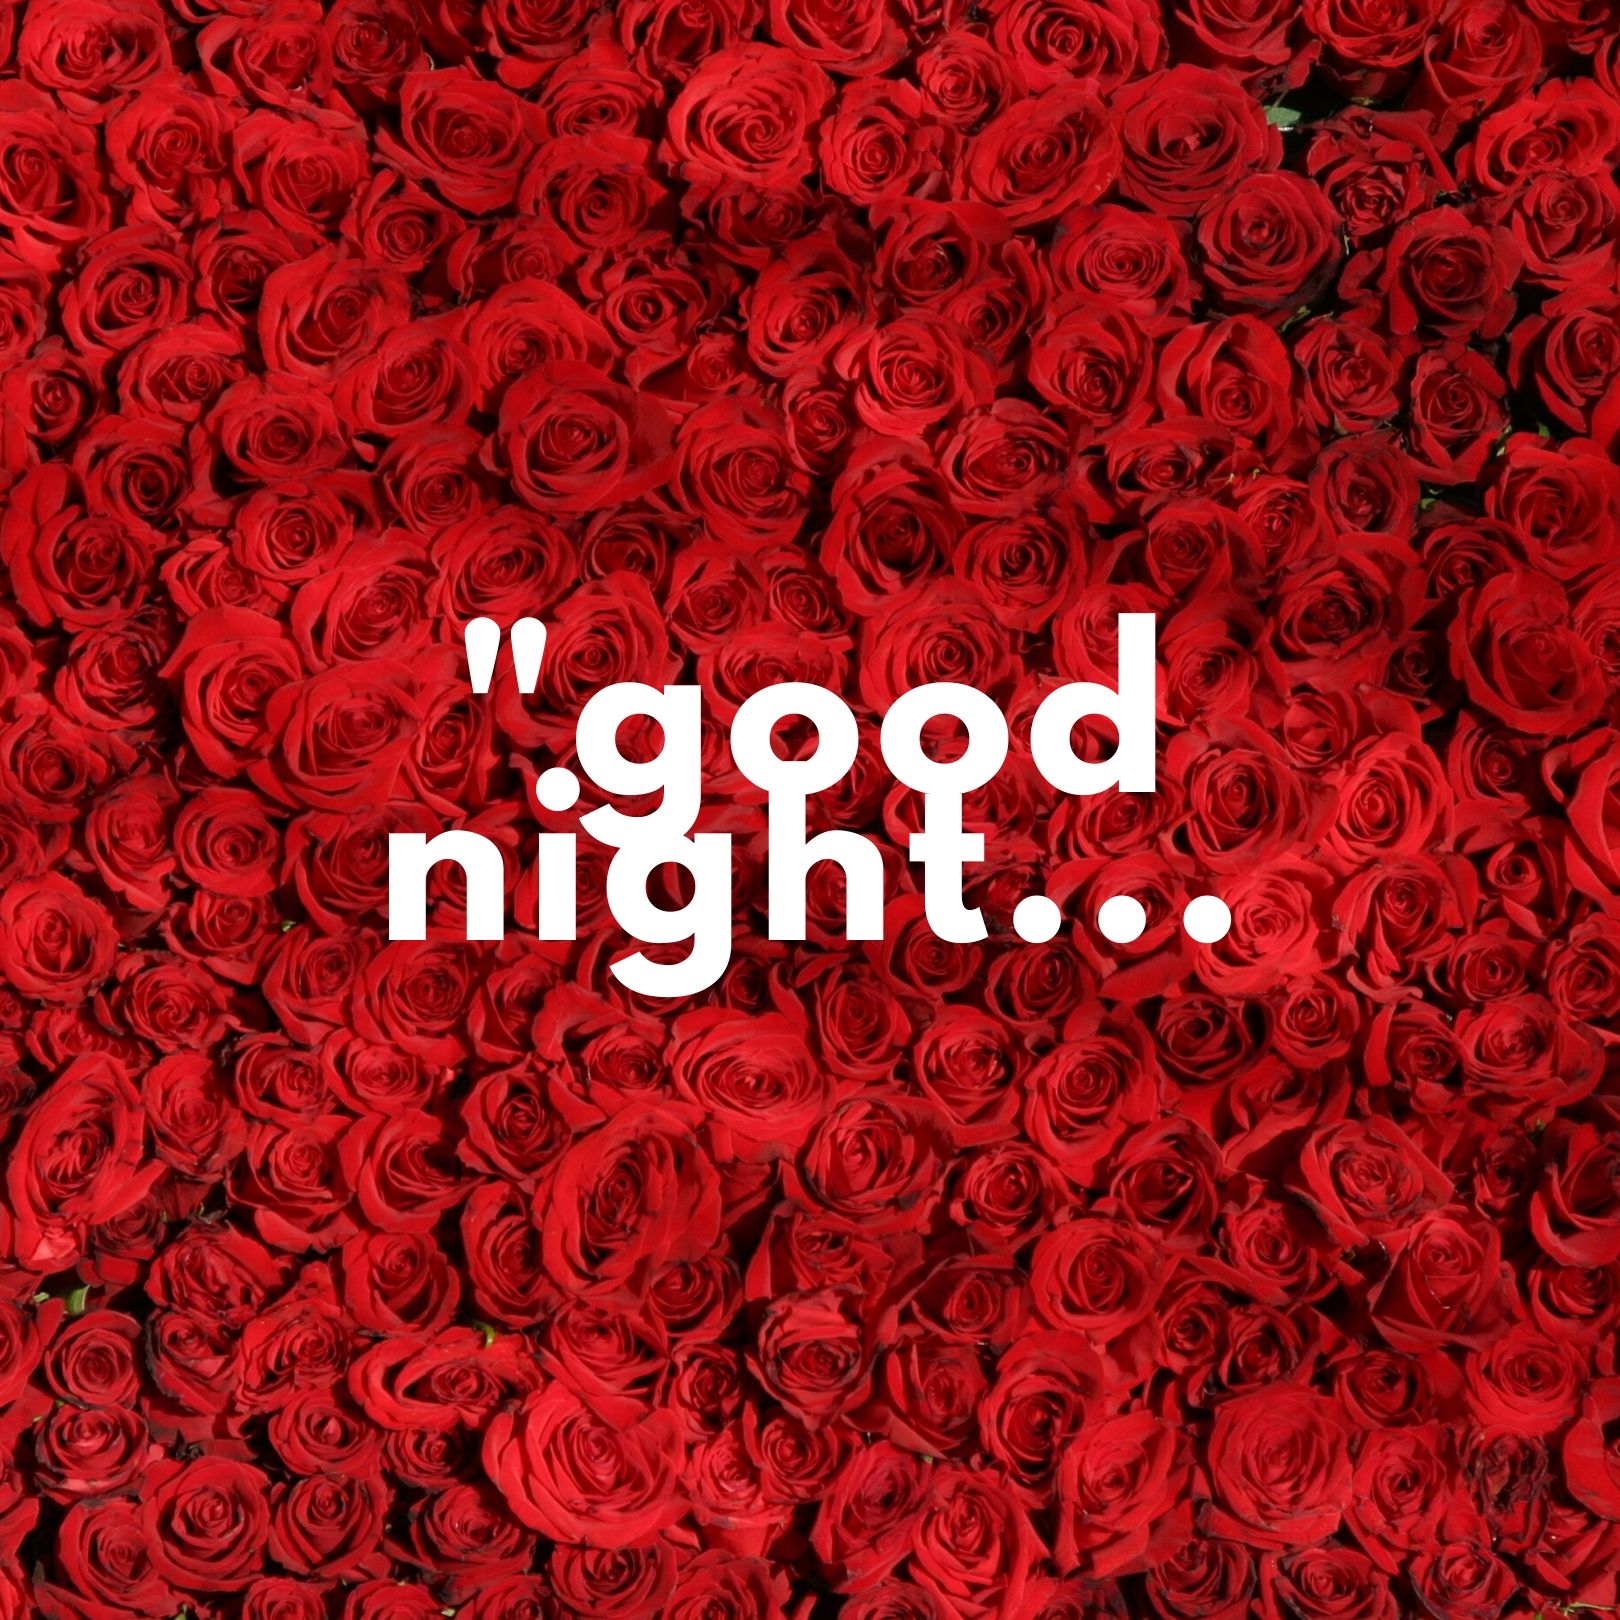 Good Night rose photo hd